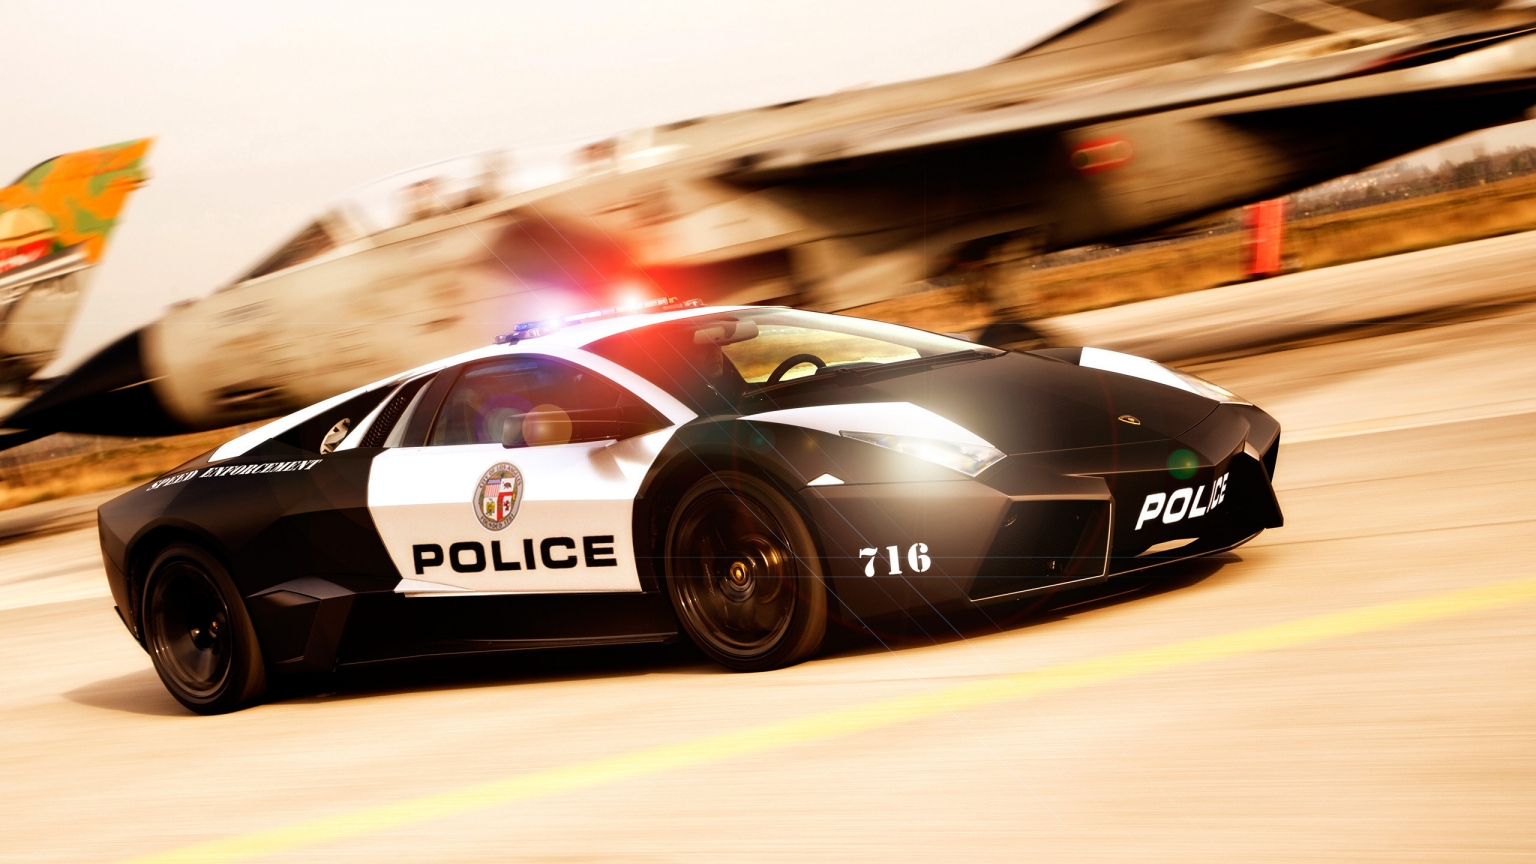 Lamborghini Police Car NFS for 1536 x 864 HDTV resolution